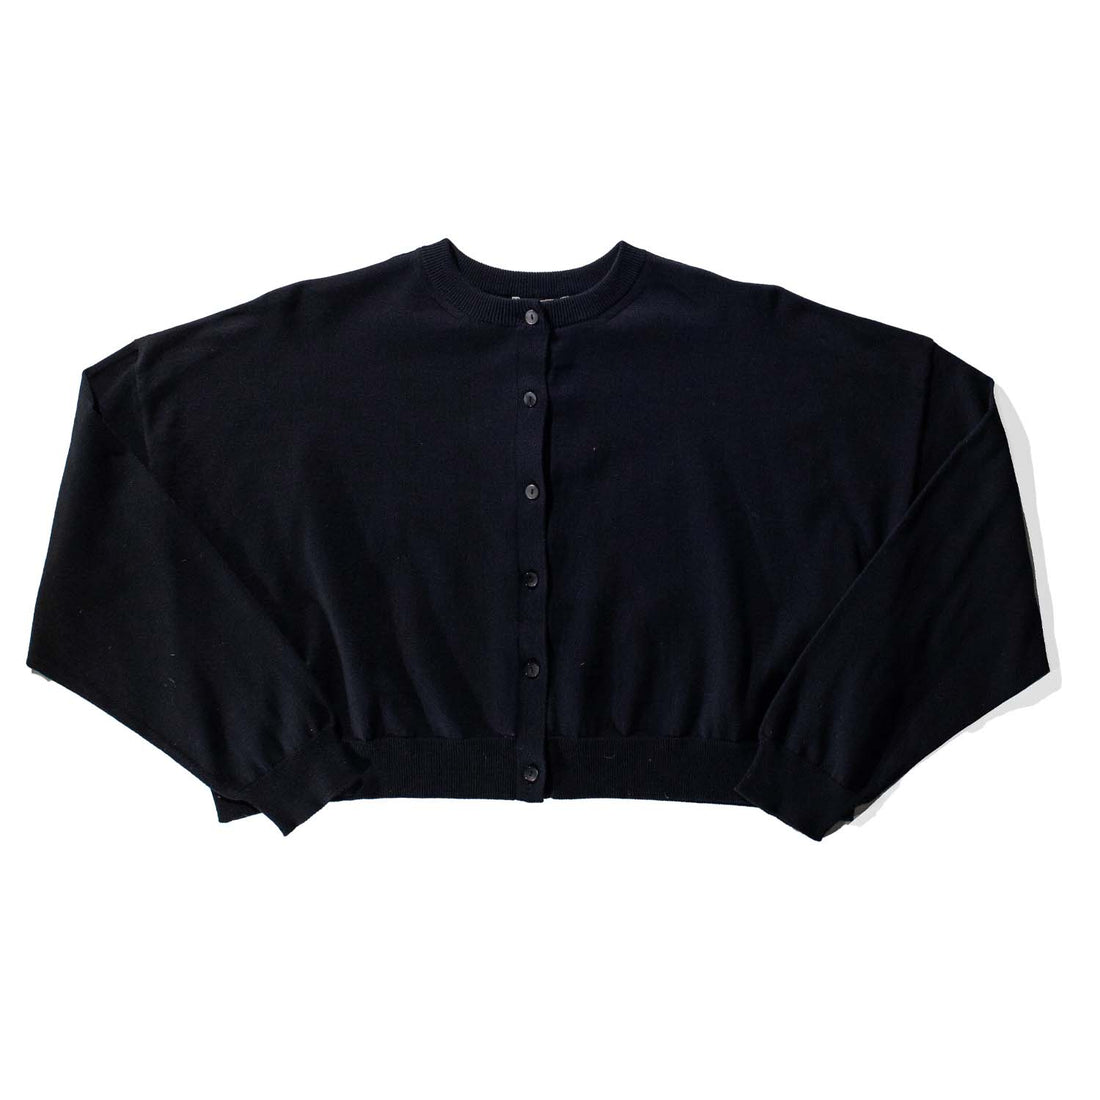 Ichi Antiquités Whole Garment Cropped Cardigan in Black